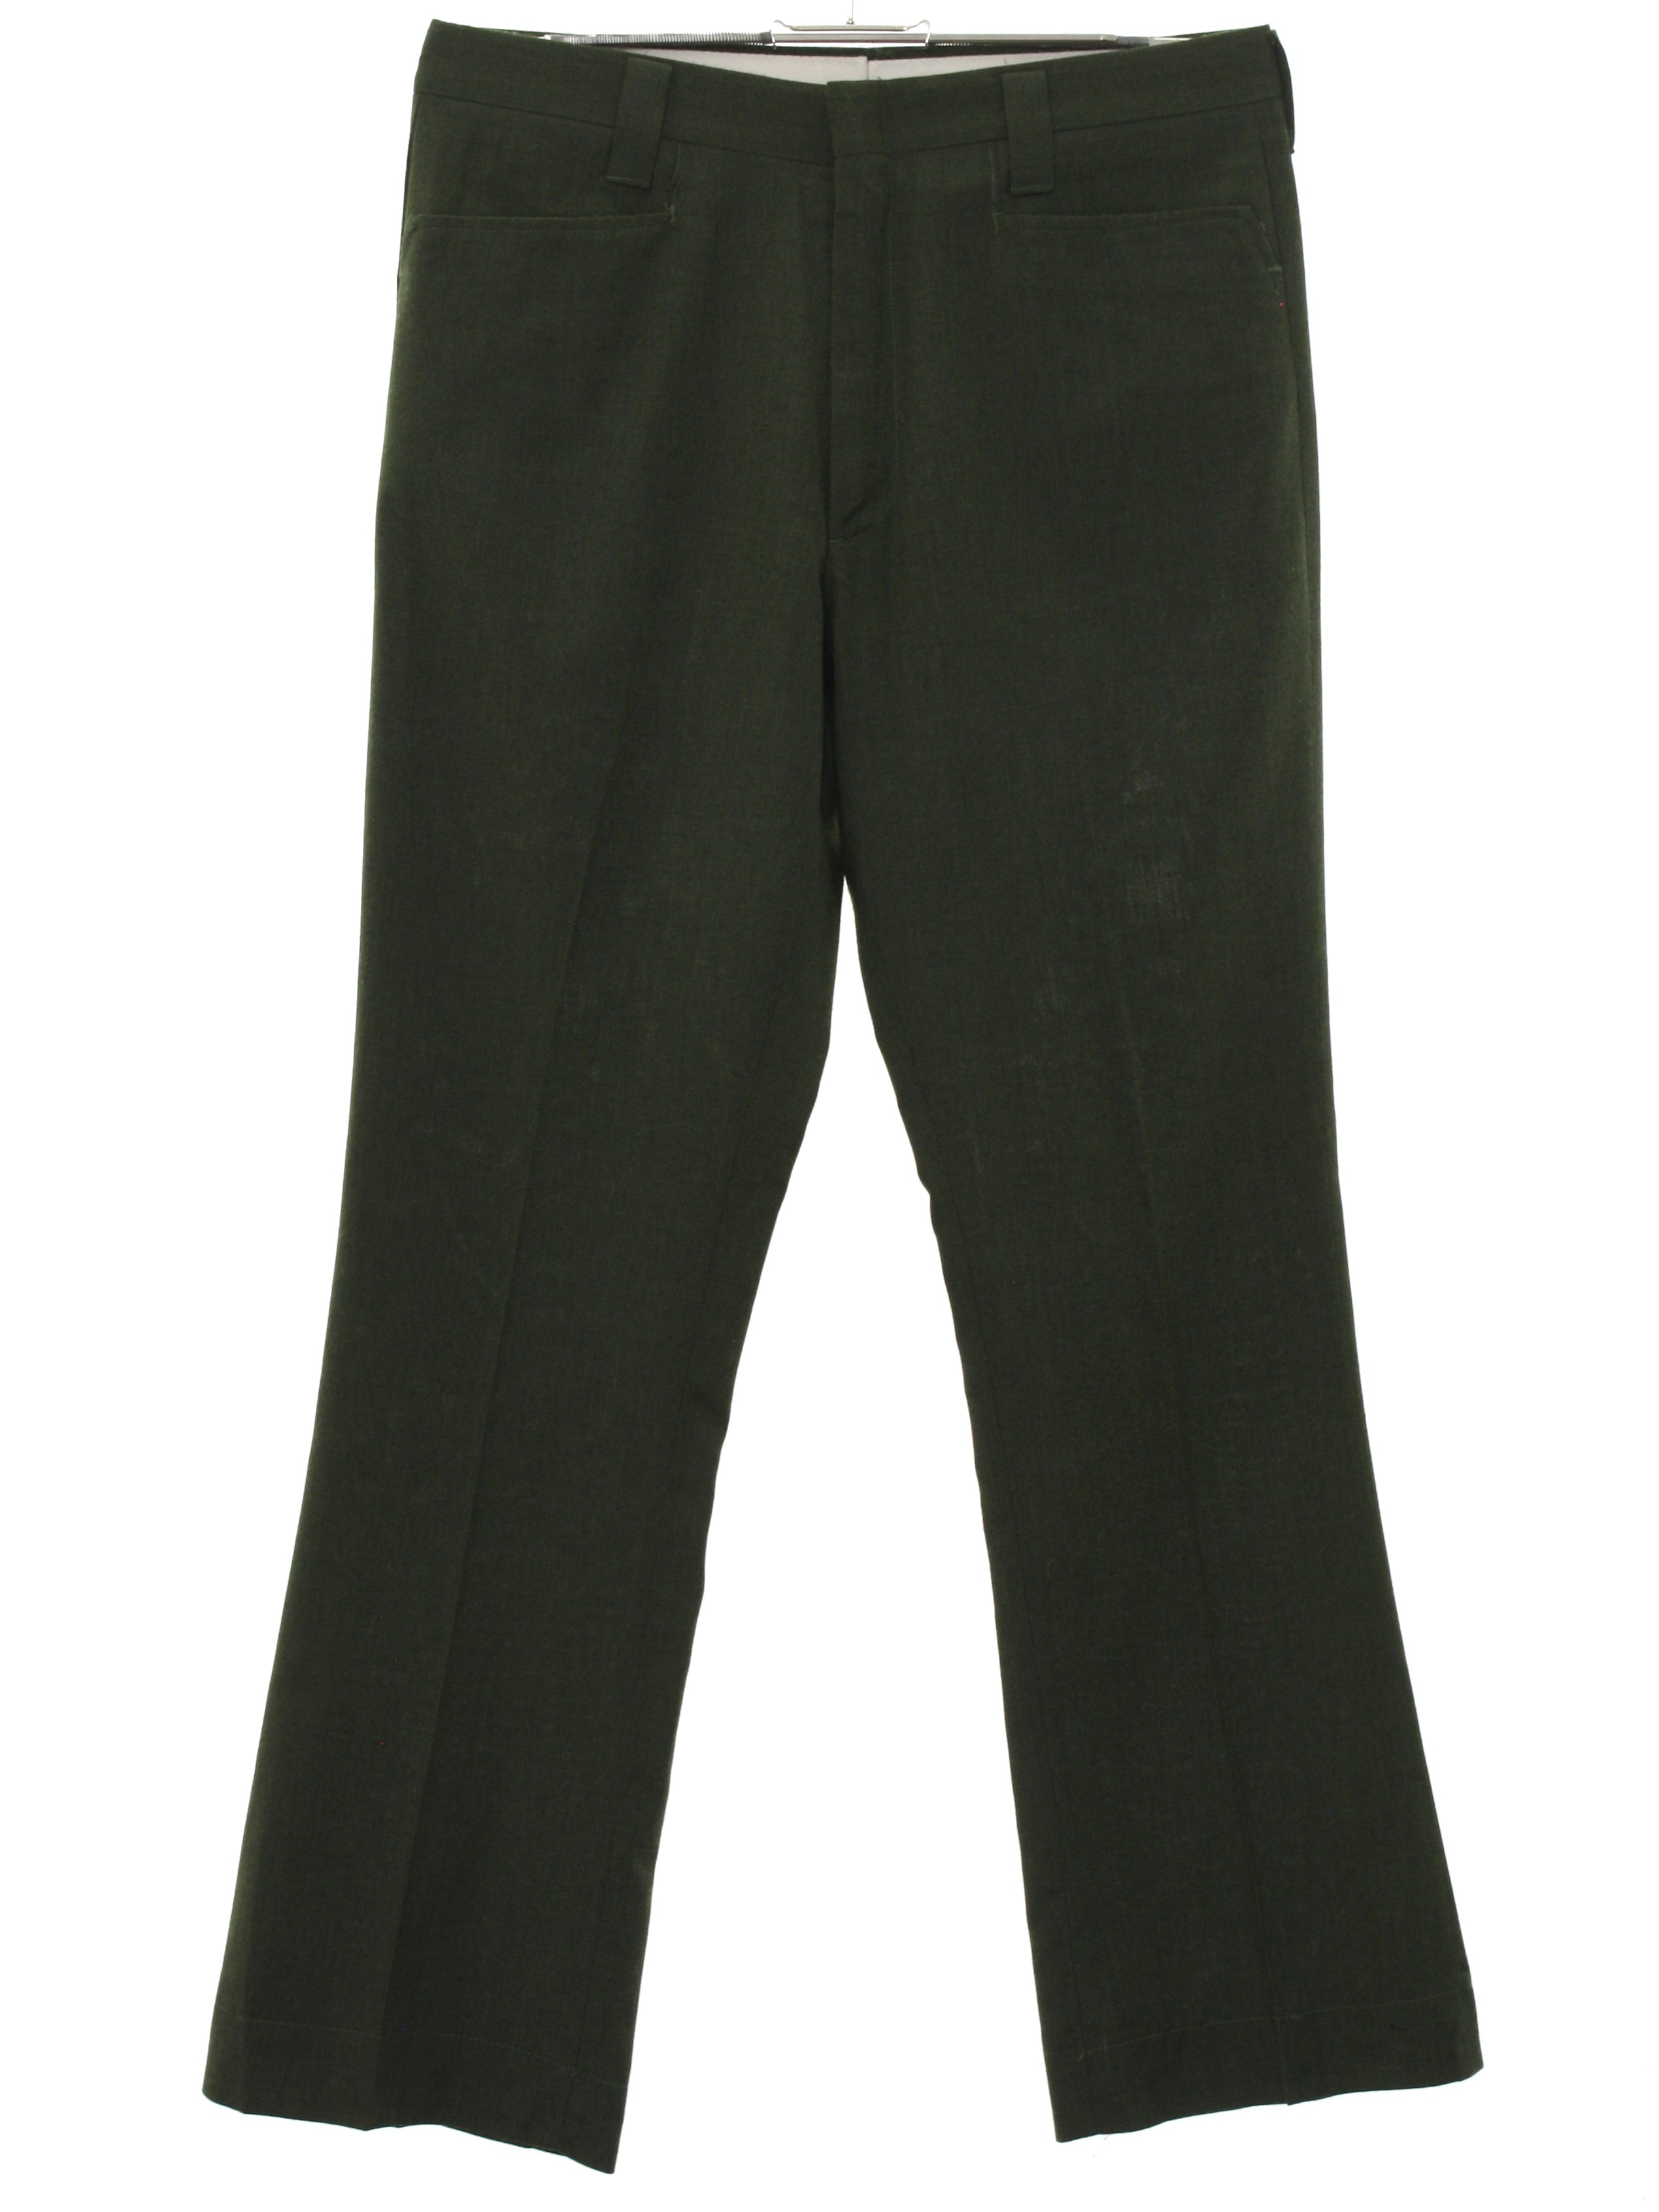 Farah 60's Vintage Flared Pants / Flares: 60s -Farah- Mens khaki green ...